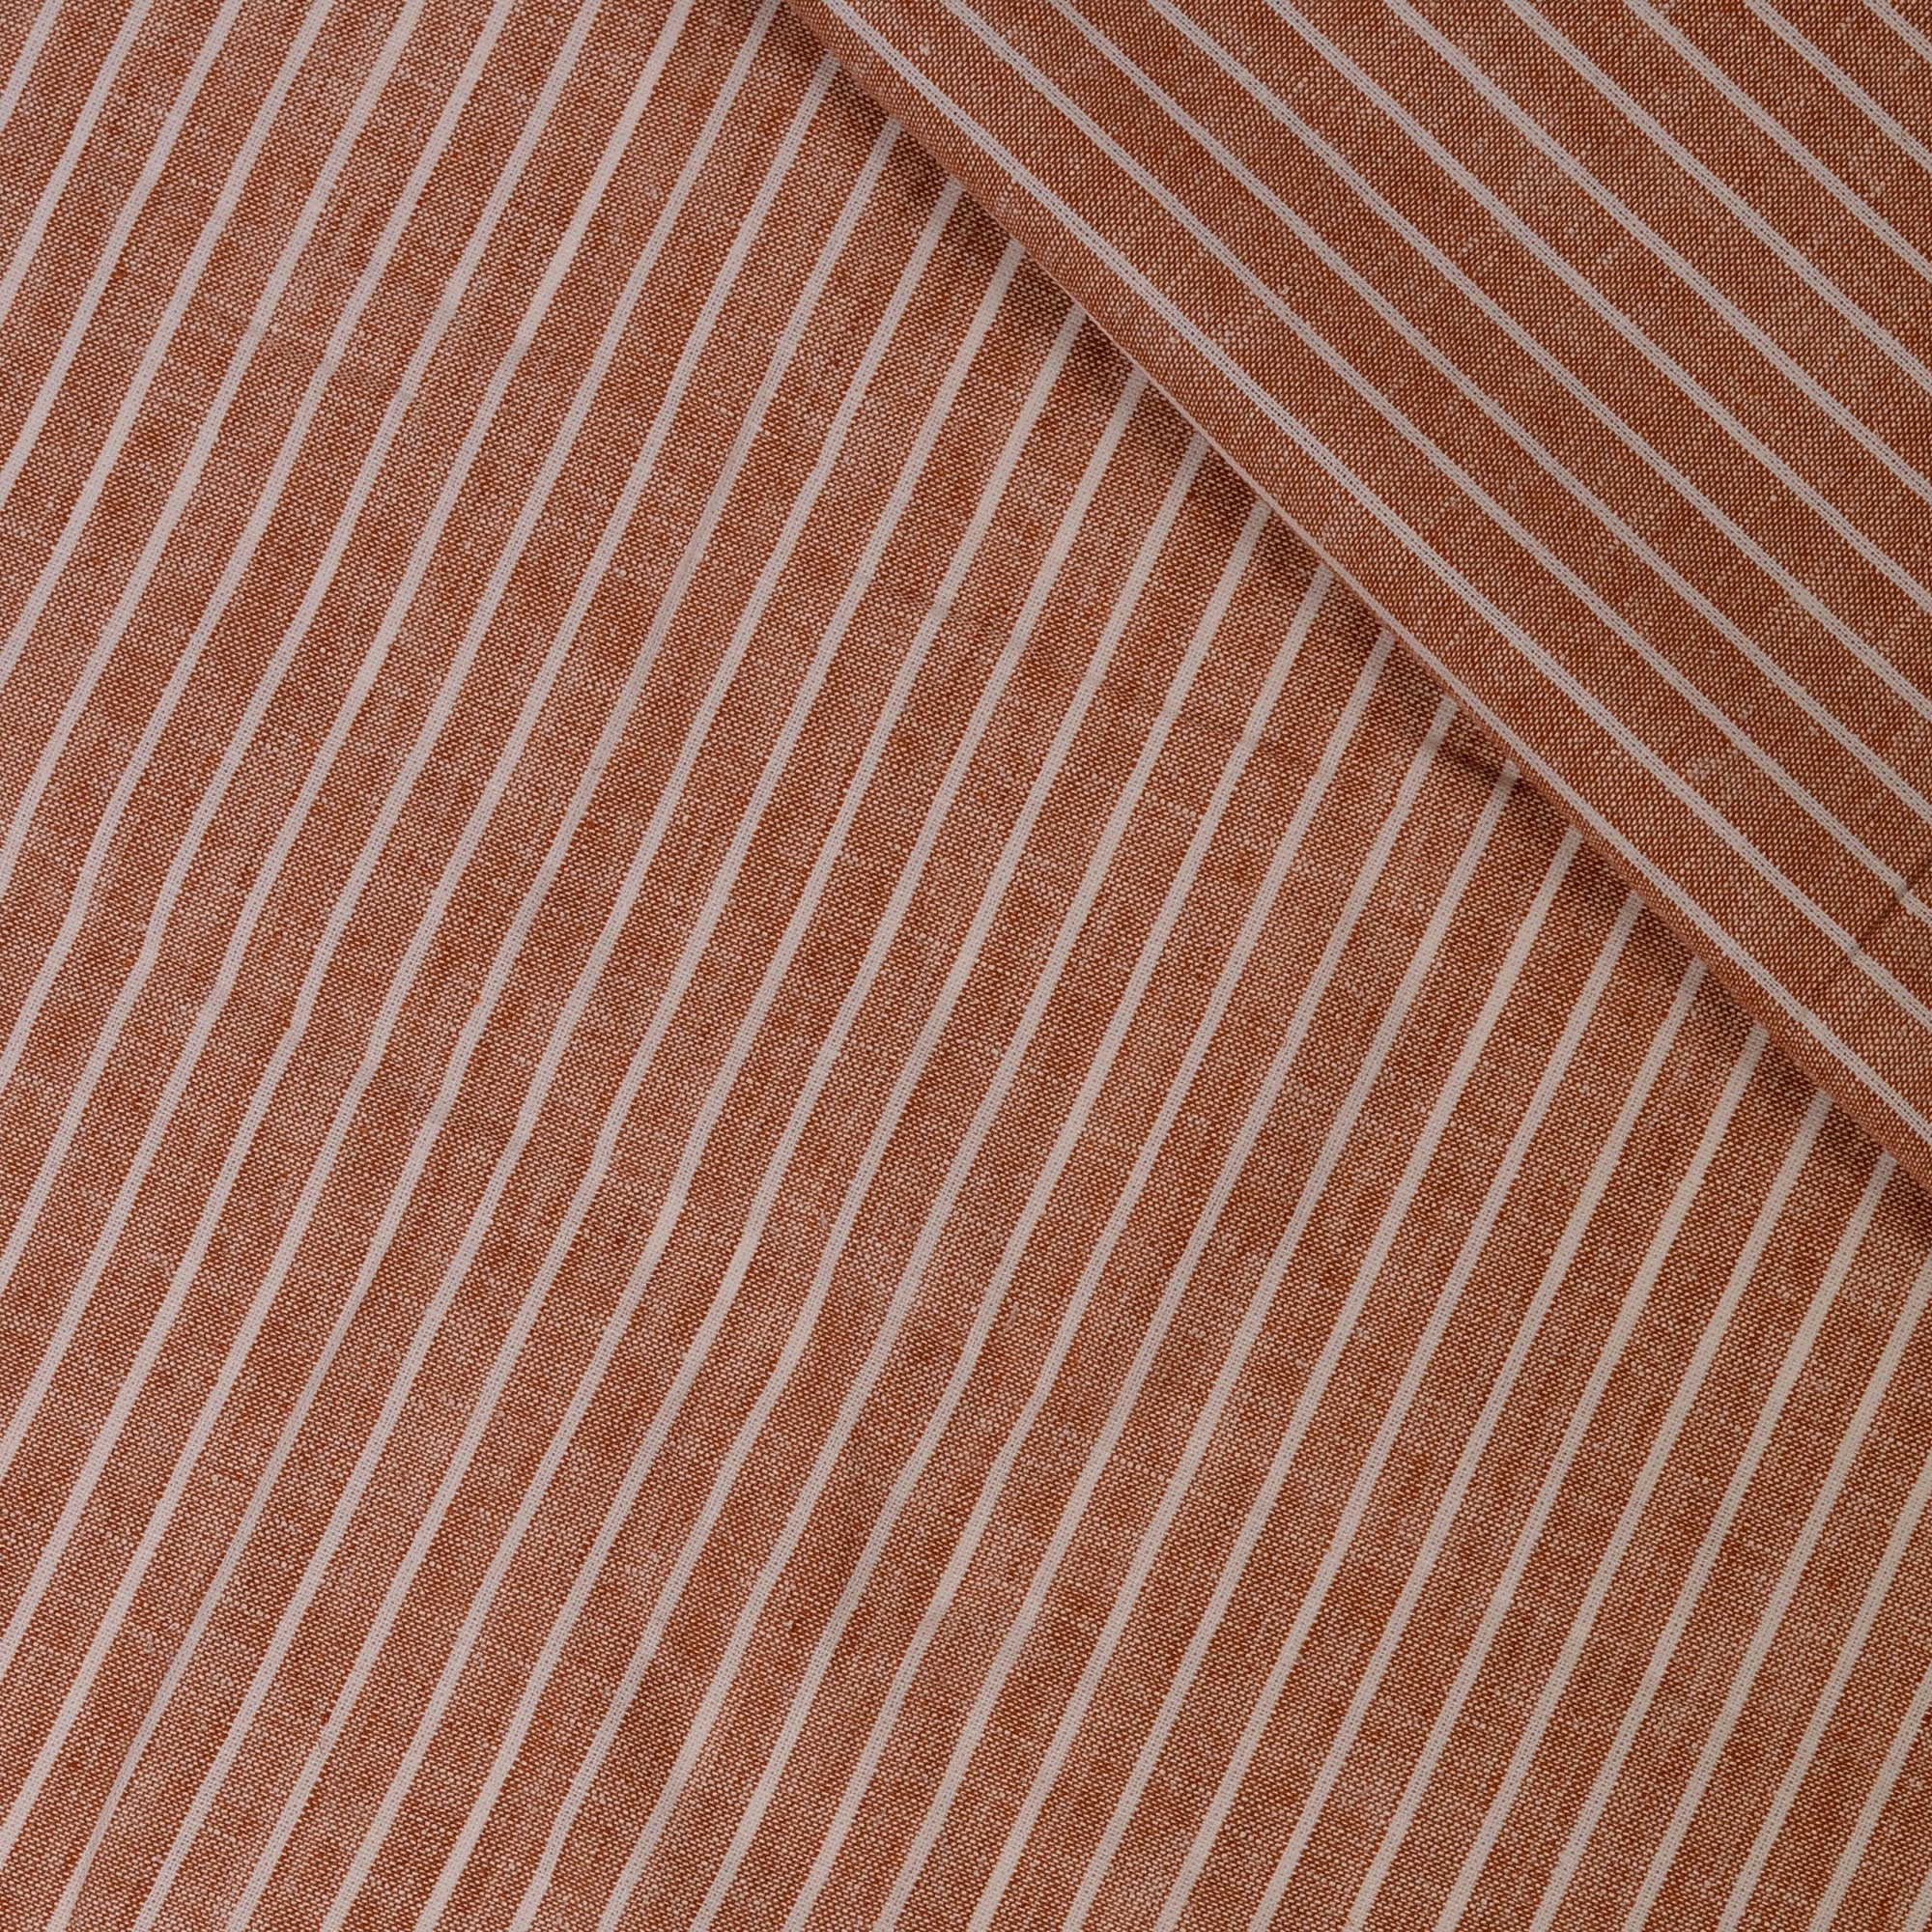 Stripe Rust Linen Cotton Fabric